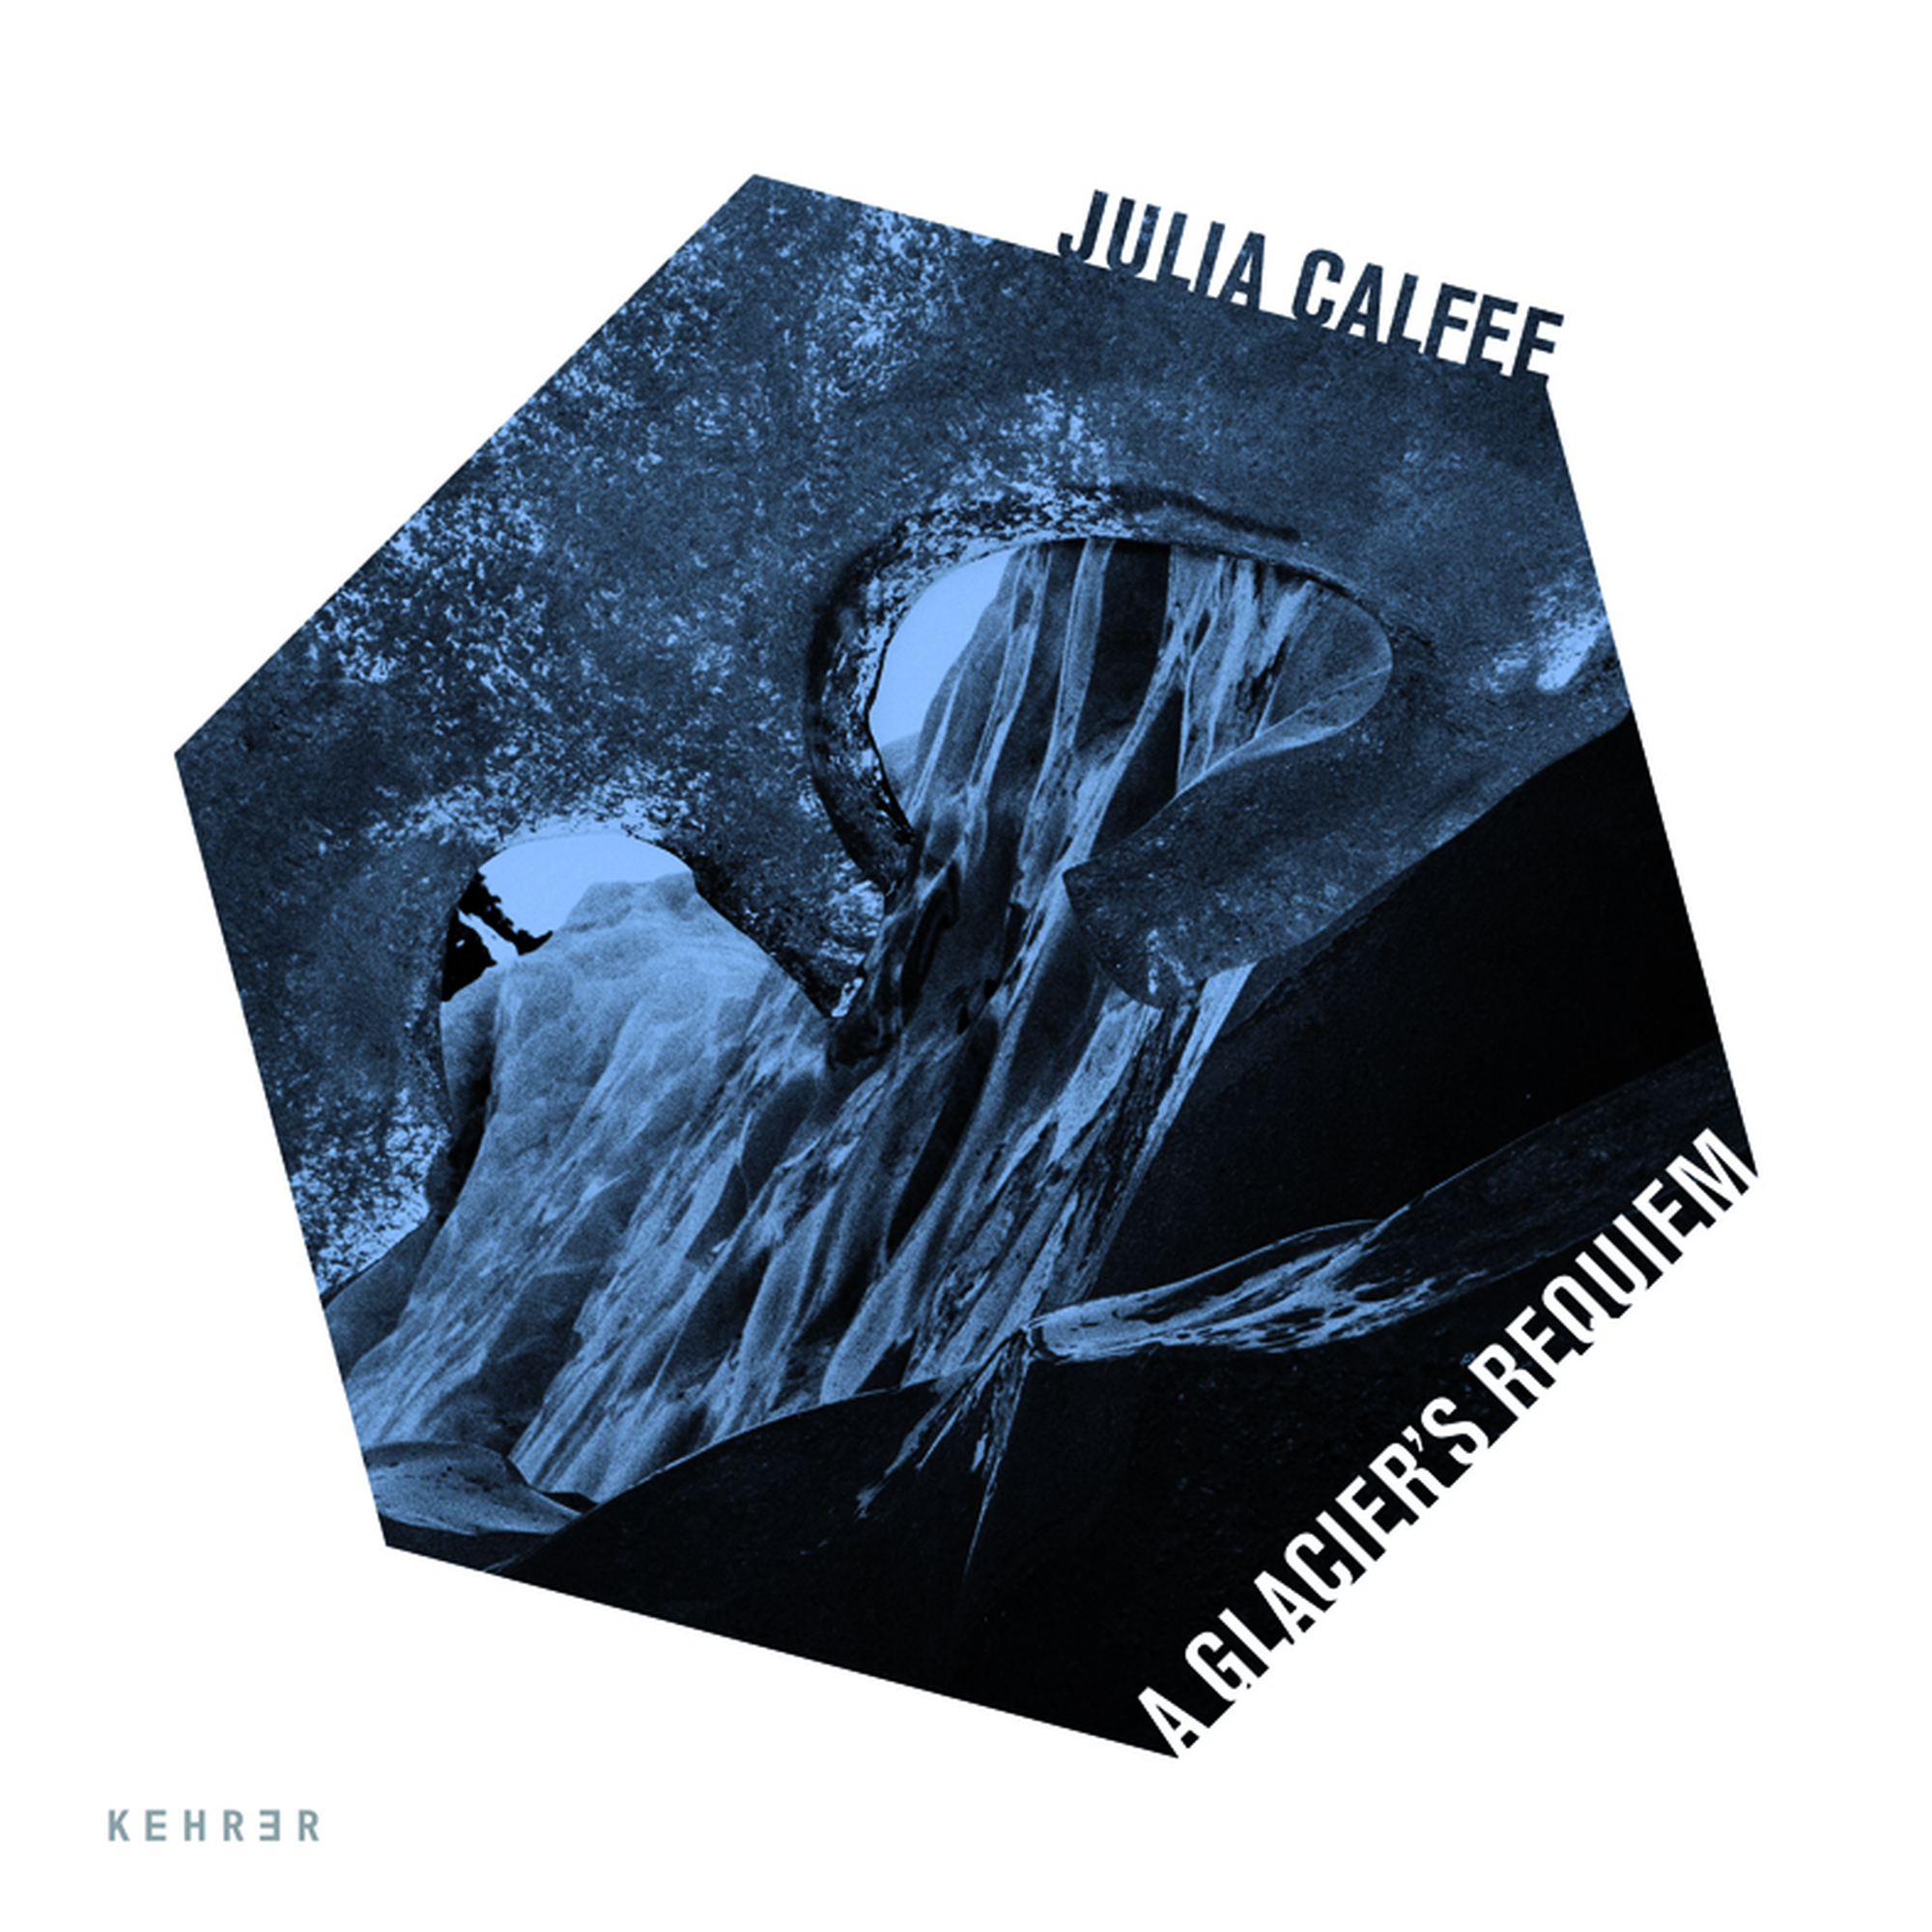 Rezensiert: «A Glacier’s Requiem» von Julia Calfee